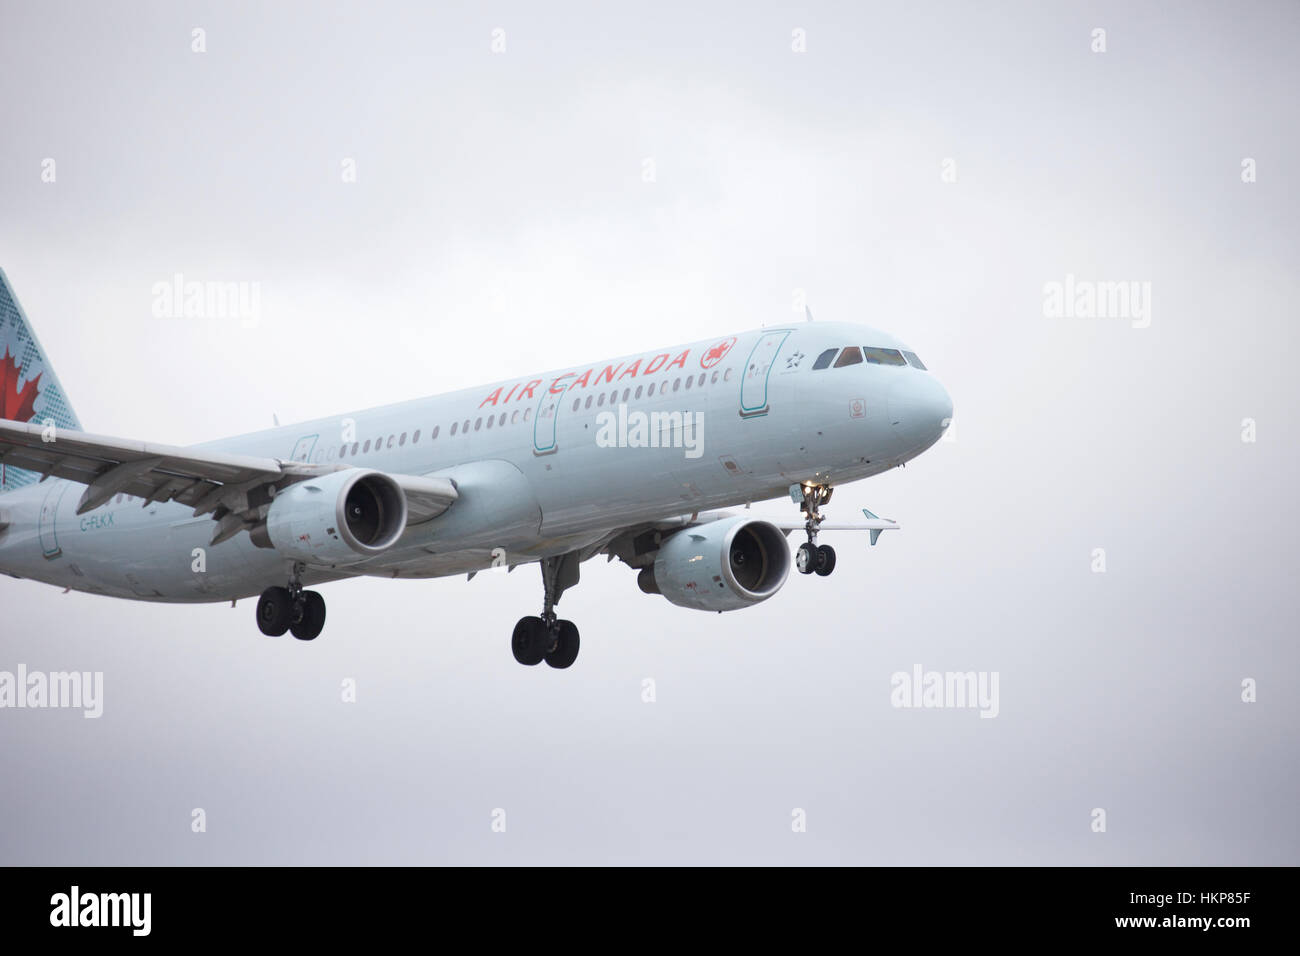 Air Canada Airbus 320 Landing at Toronto Pearson Airport Stock Photo